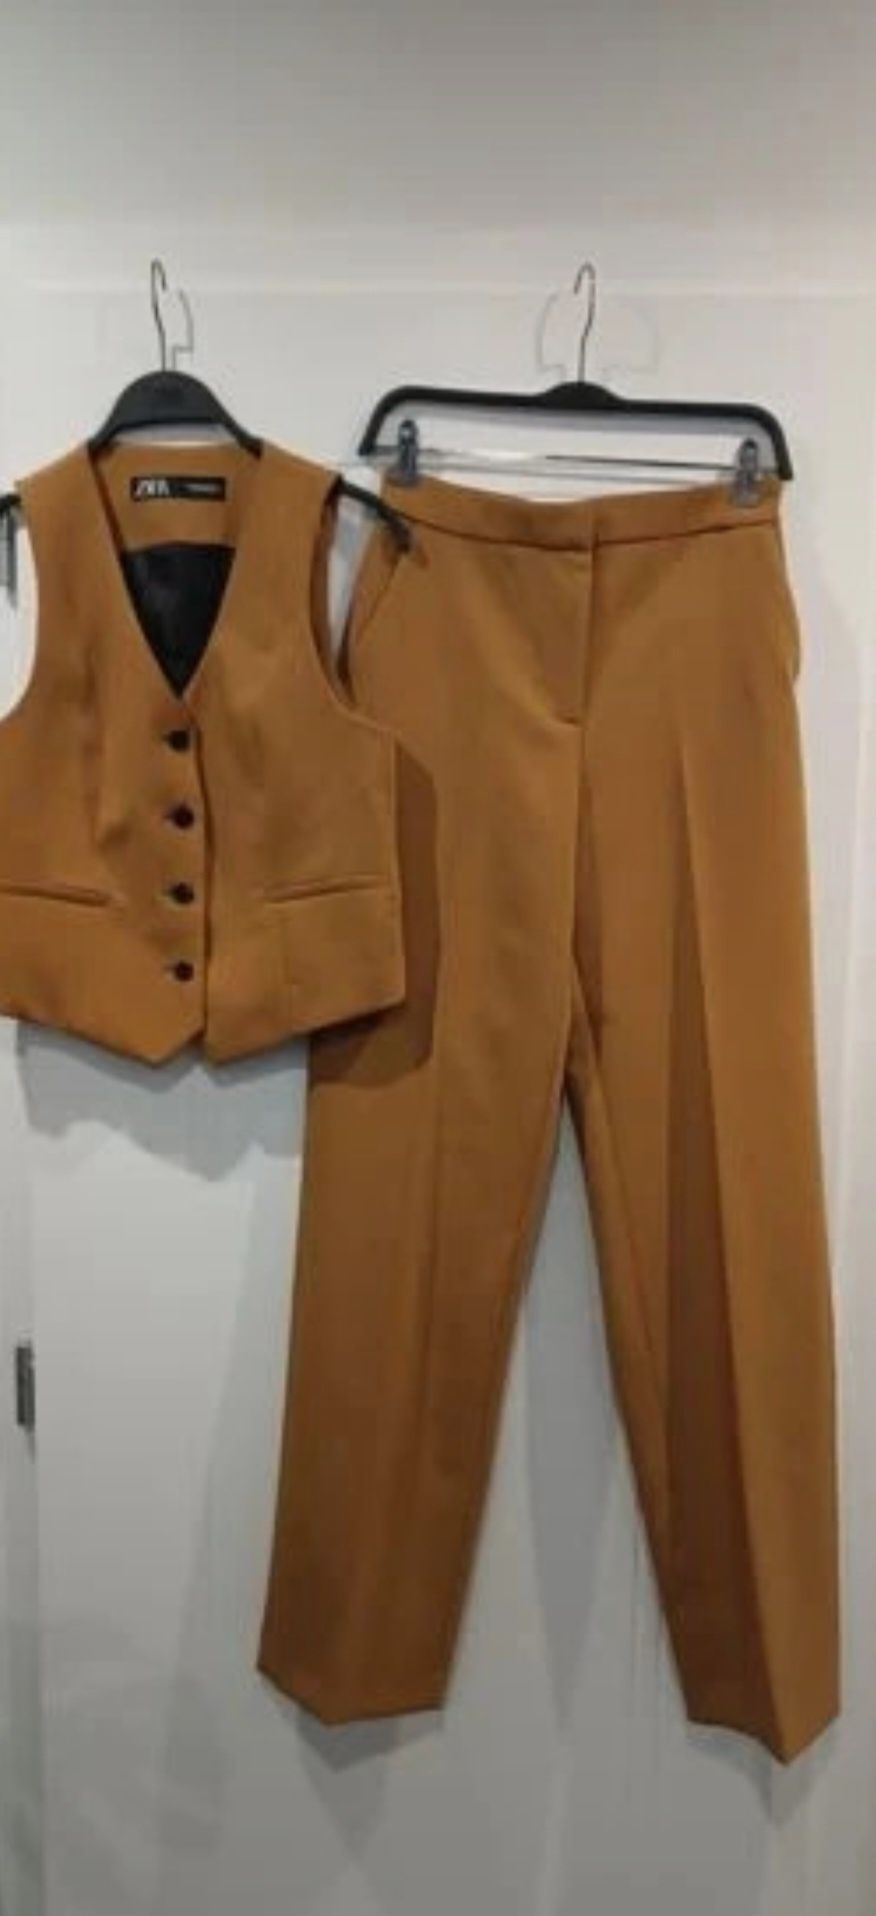 Komplet Zara spodnie i kamizelka